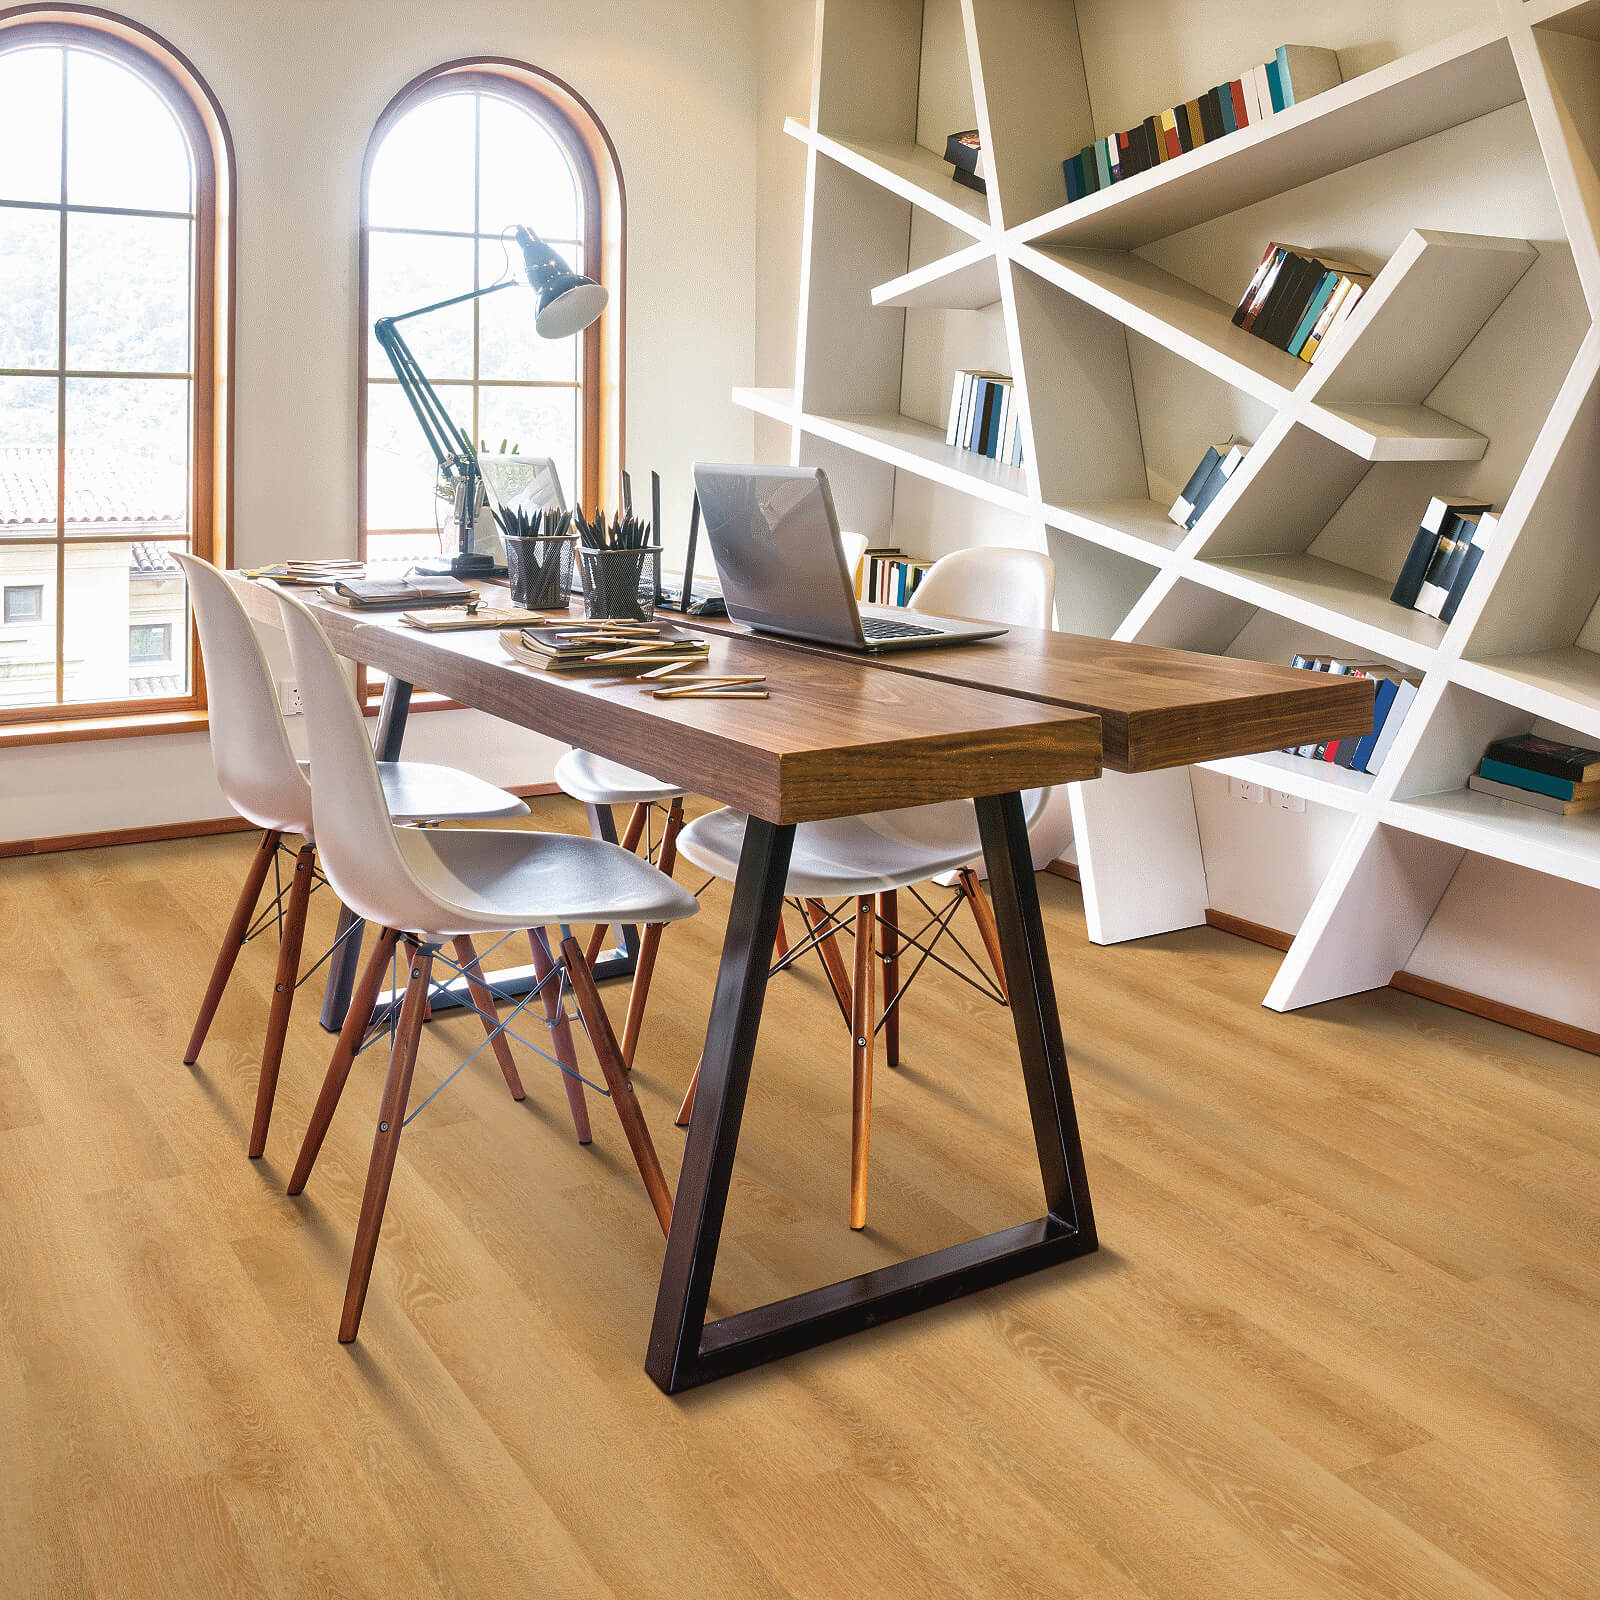 vinyl flooring in home office, Omaha, NE | Kelly's Carpet Omaha